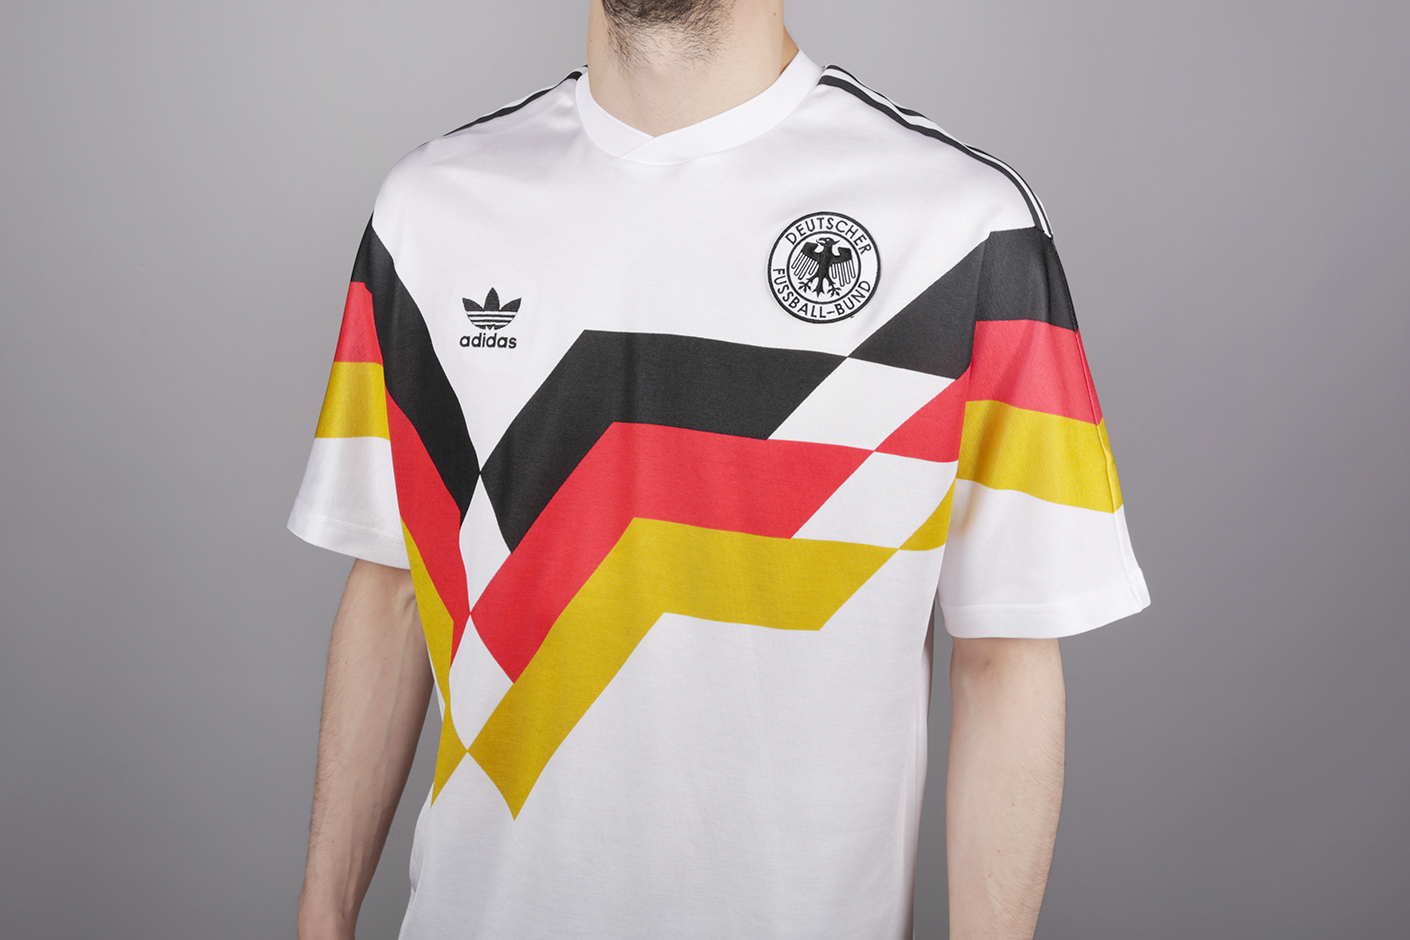 Адидас сборная германии. Футболка adidas Jersey Germany. Футболка adidas Originals сборной Германии. Адидас сборная Германии 1992. Адидас сборная Германии 1990.